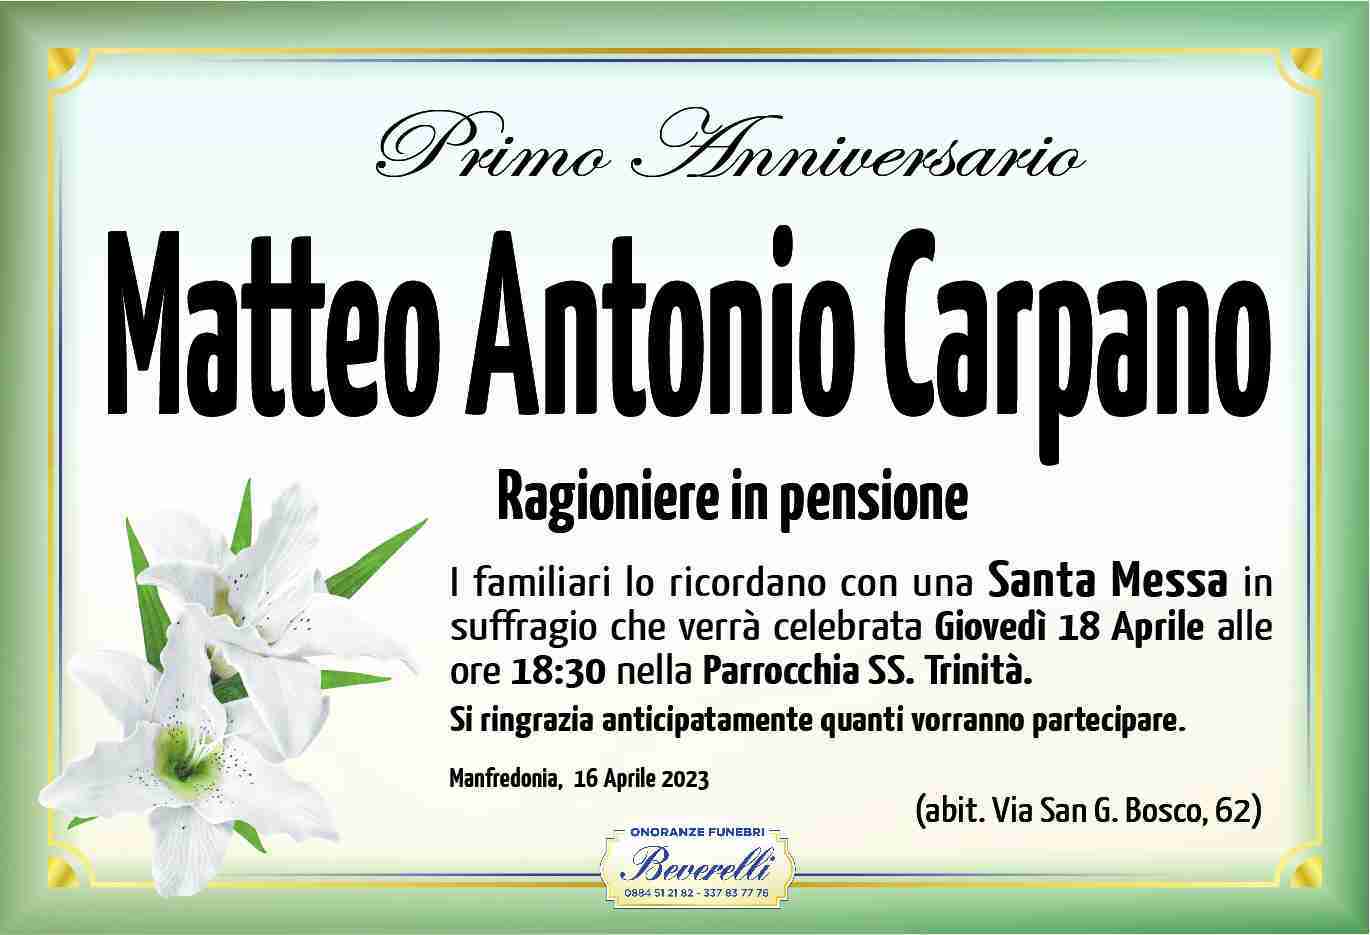 Matteo Antonio Carpano